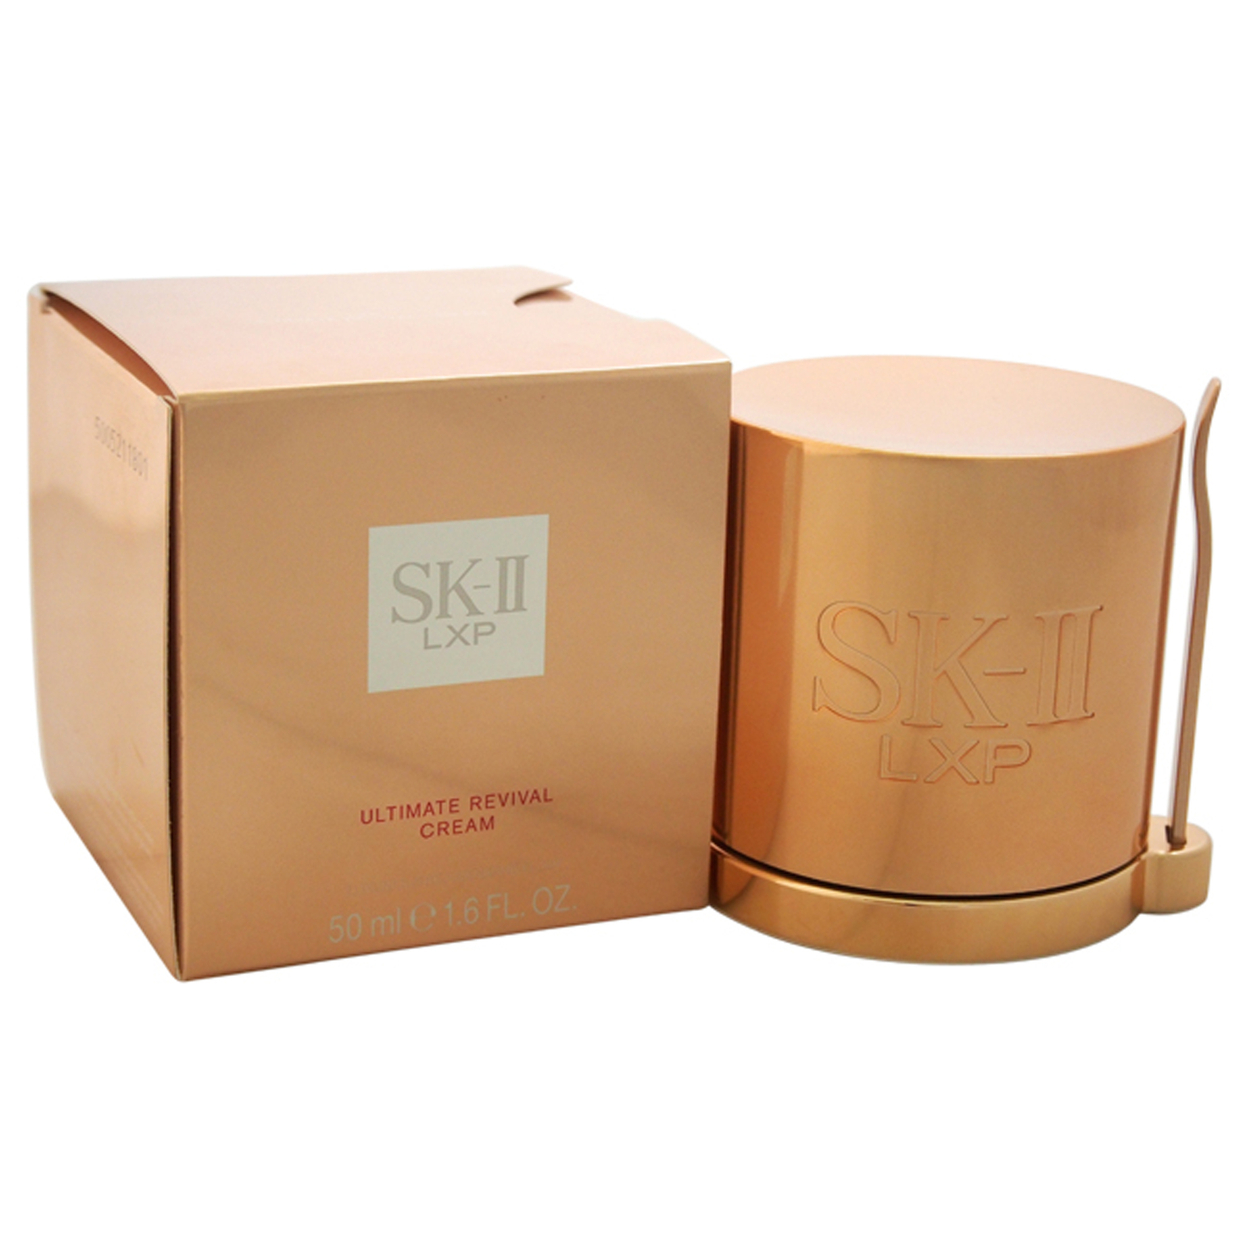 SK II Unisex SKINCARE LXP Ultimate Revival Cream 1.6 Oz